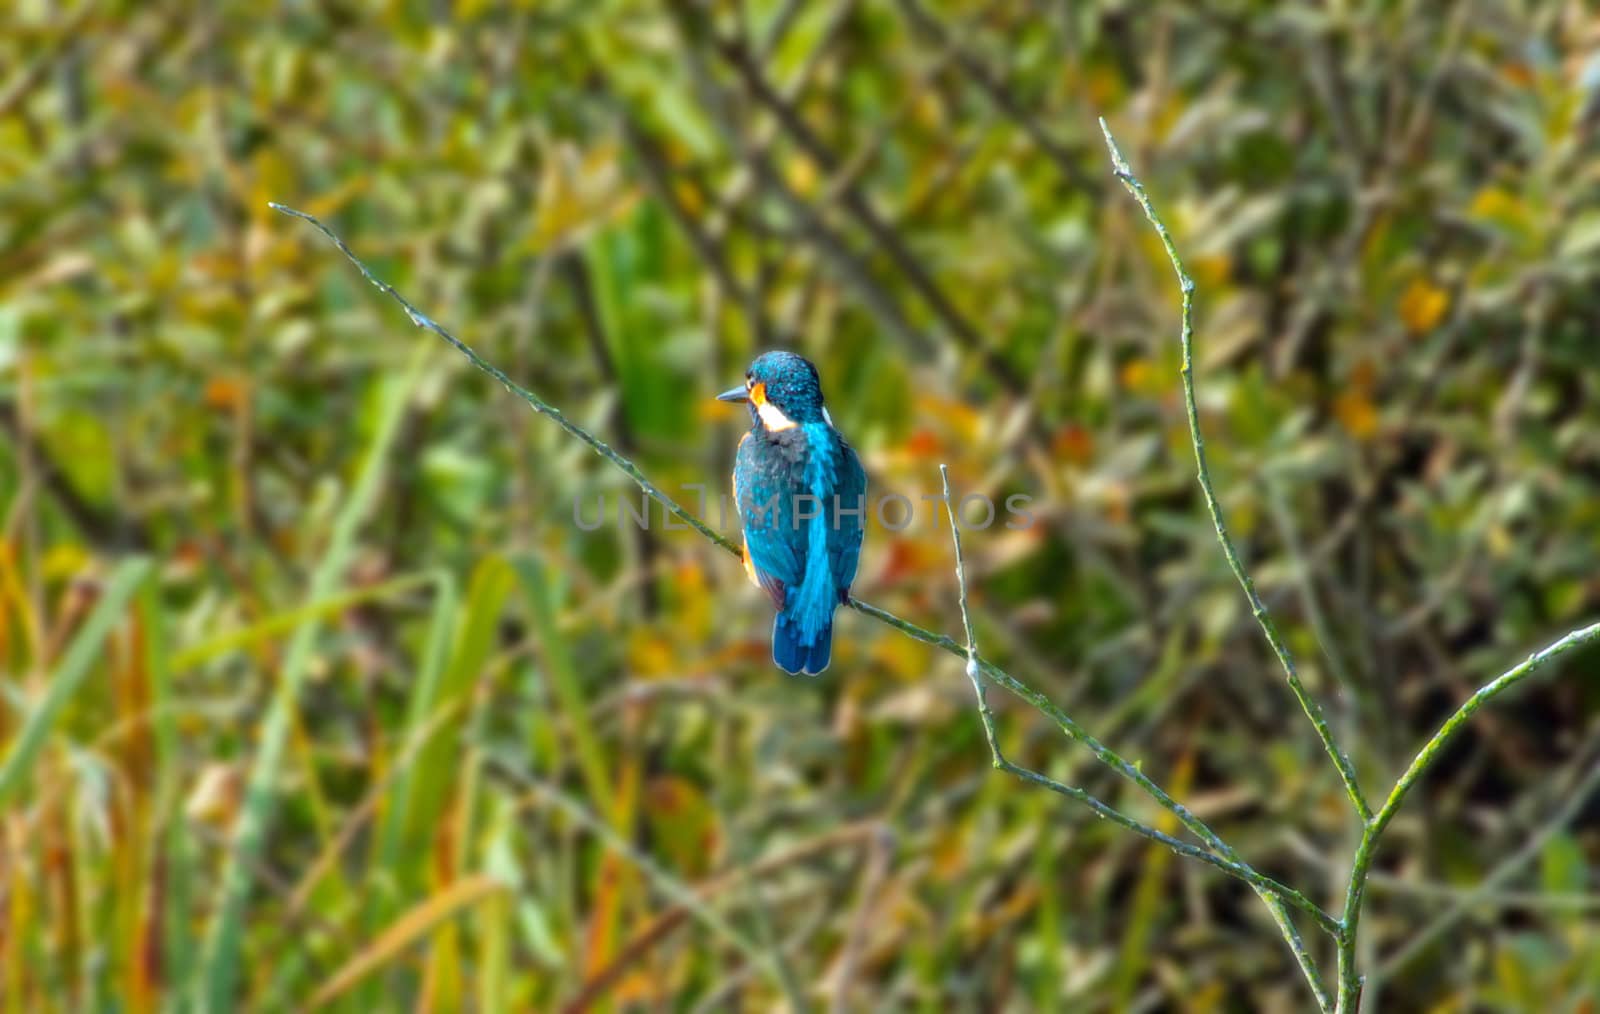 Kingfisher on a twig by renegadewanderer